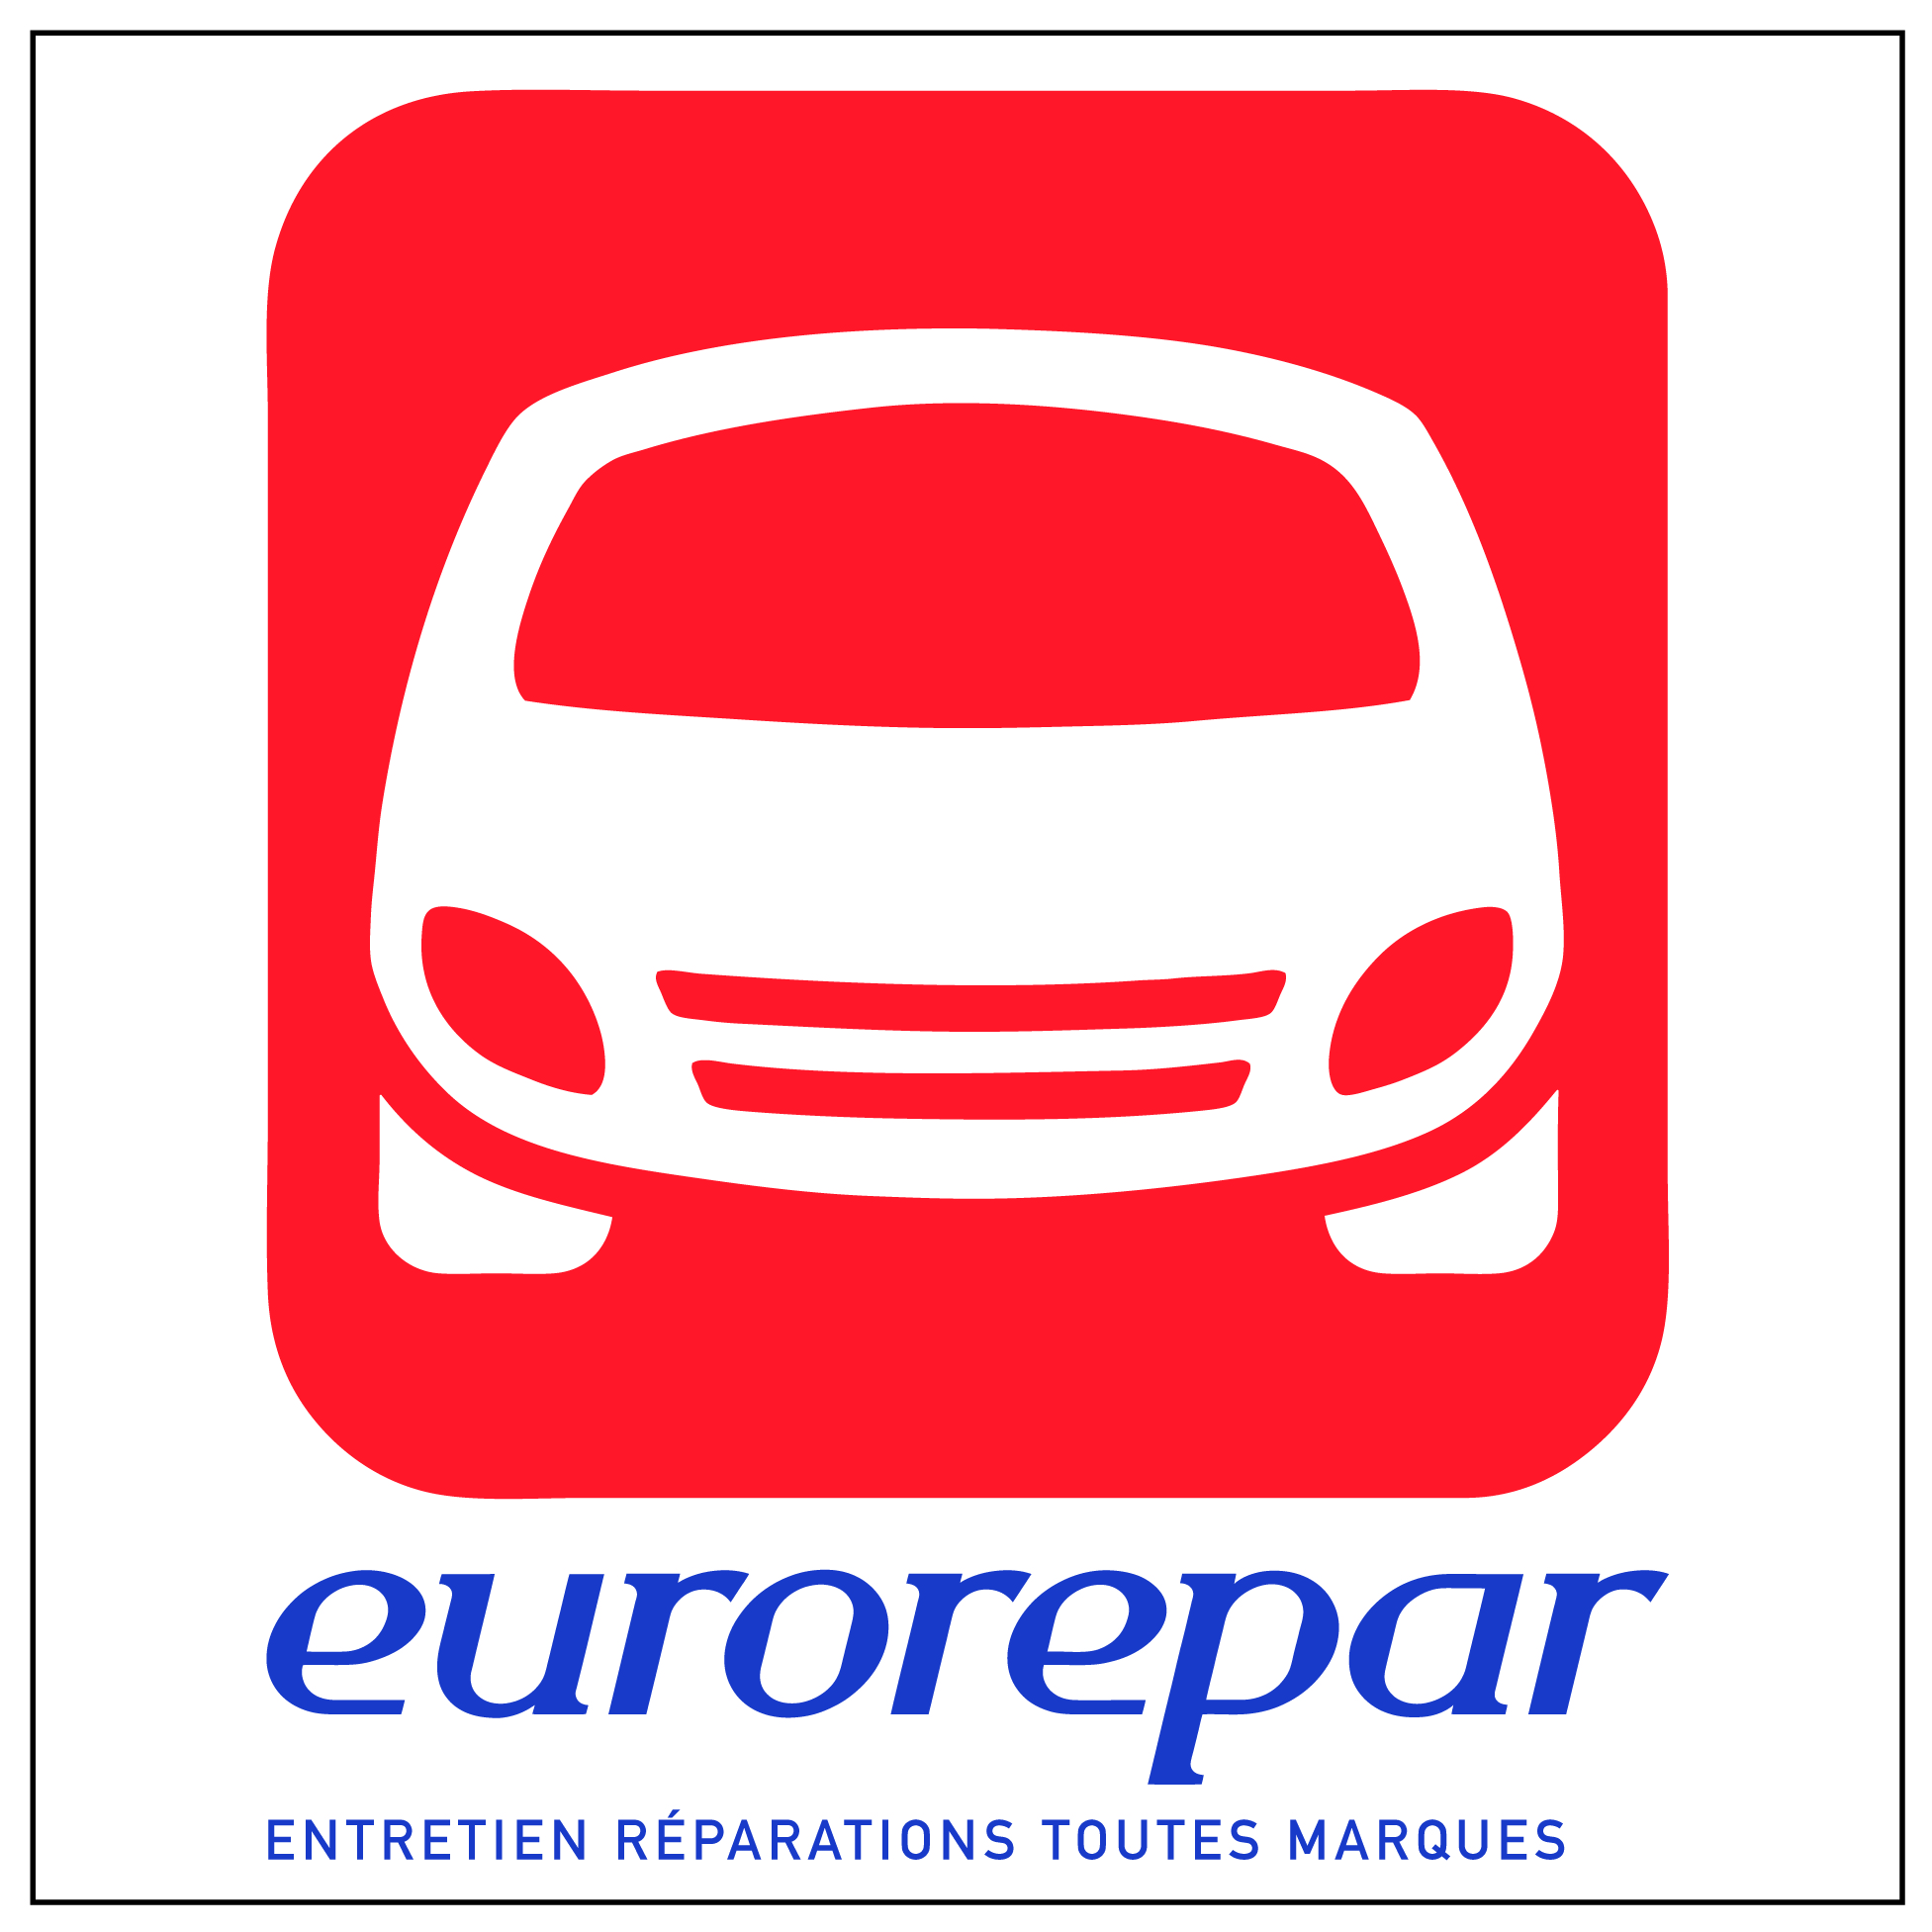 Eurorepar Garage Pargny Automobile